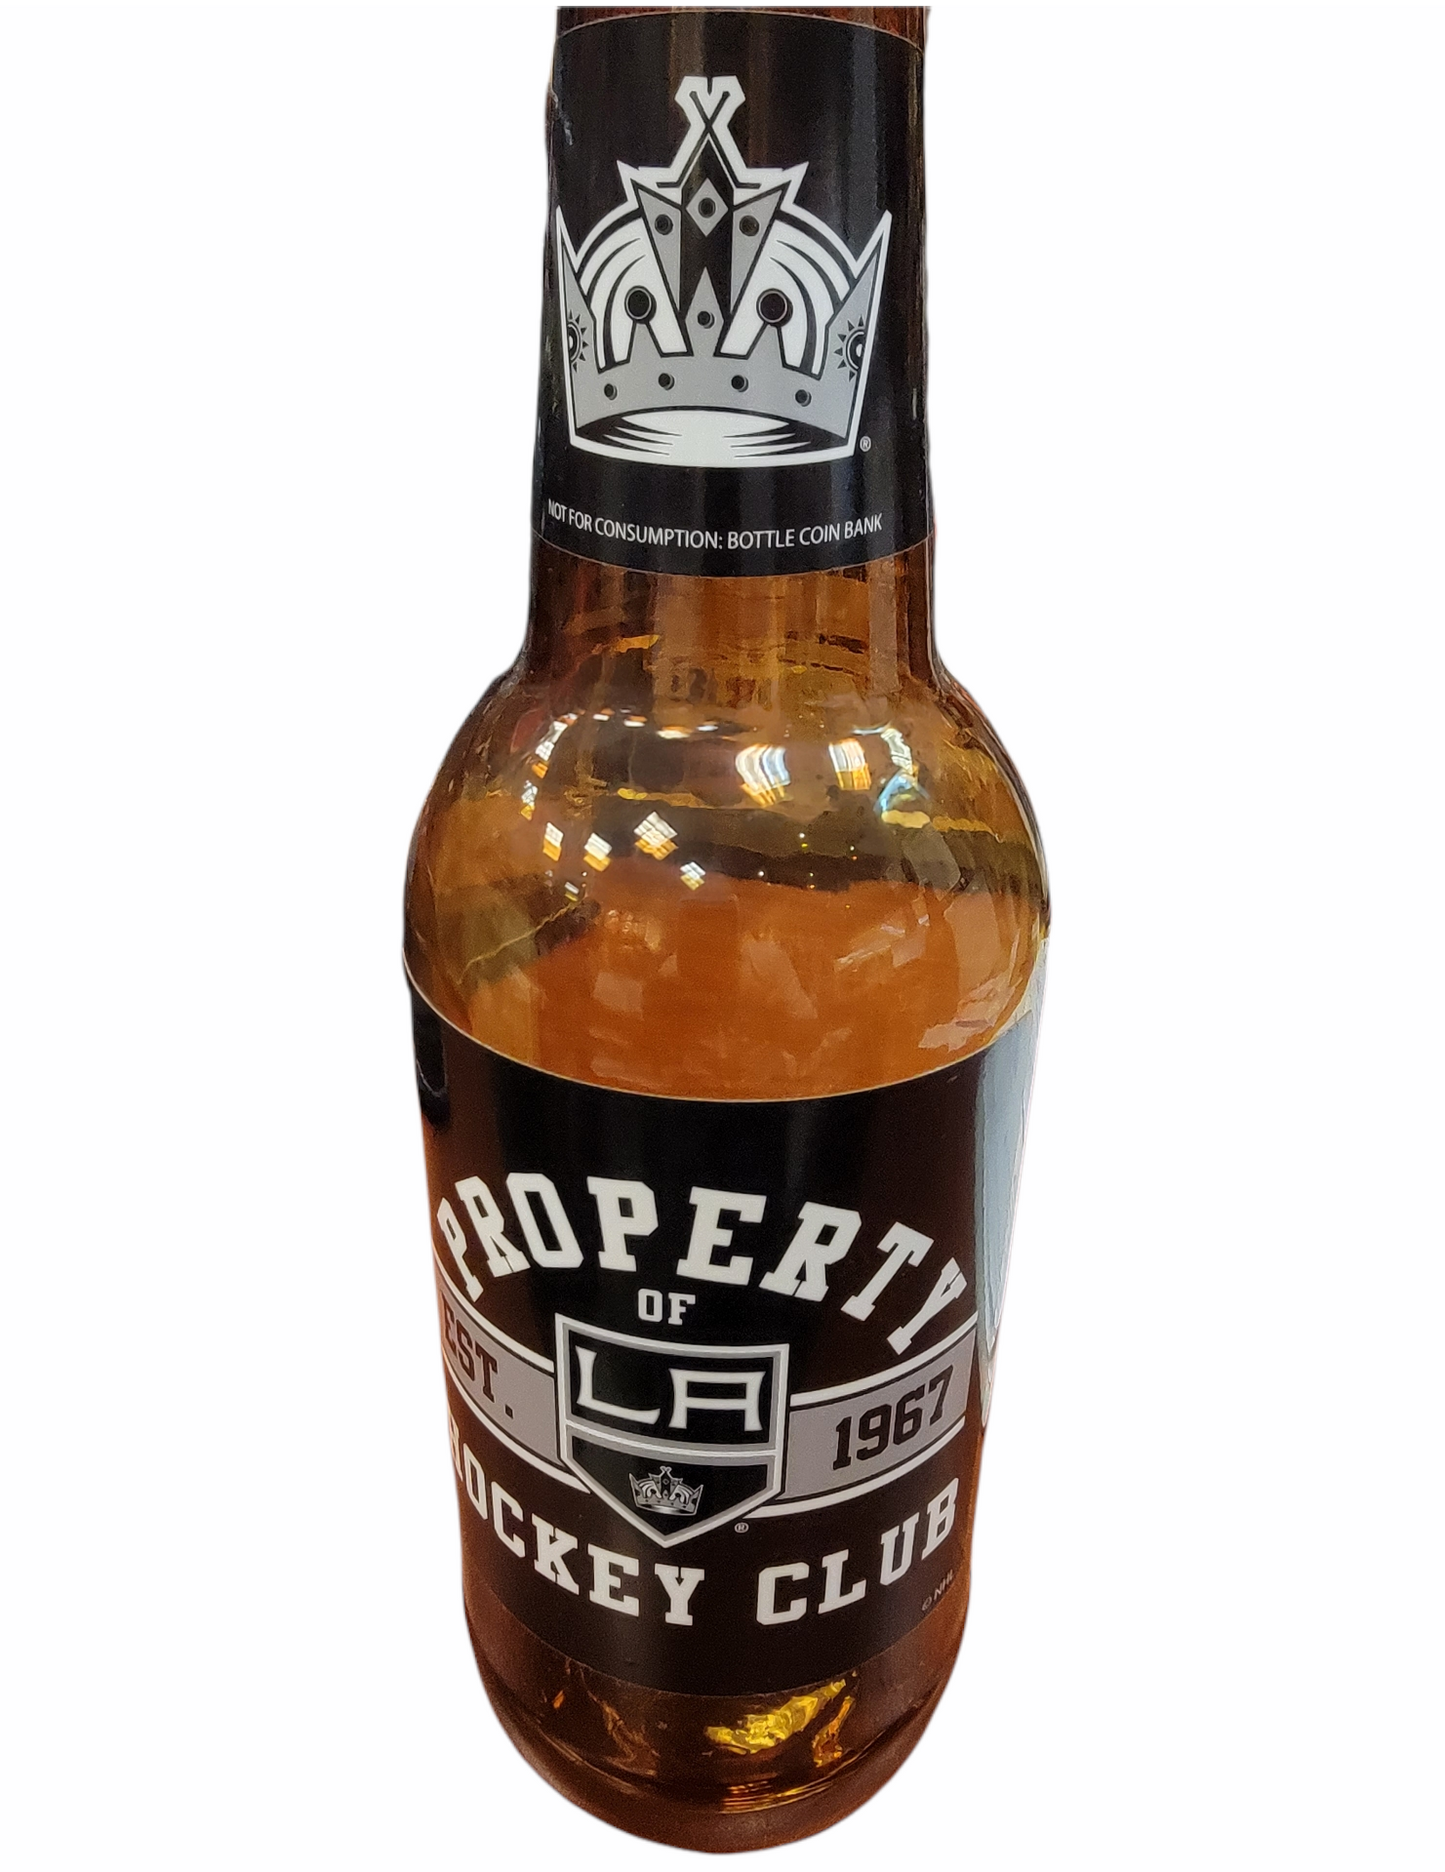 NHL Bottle Bank Kings